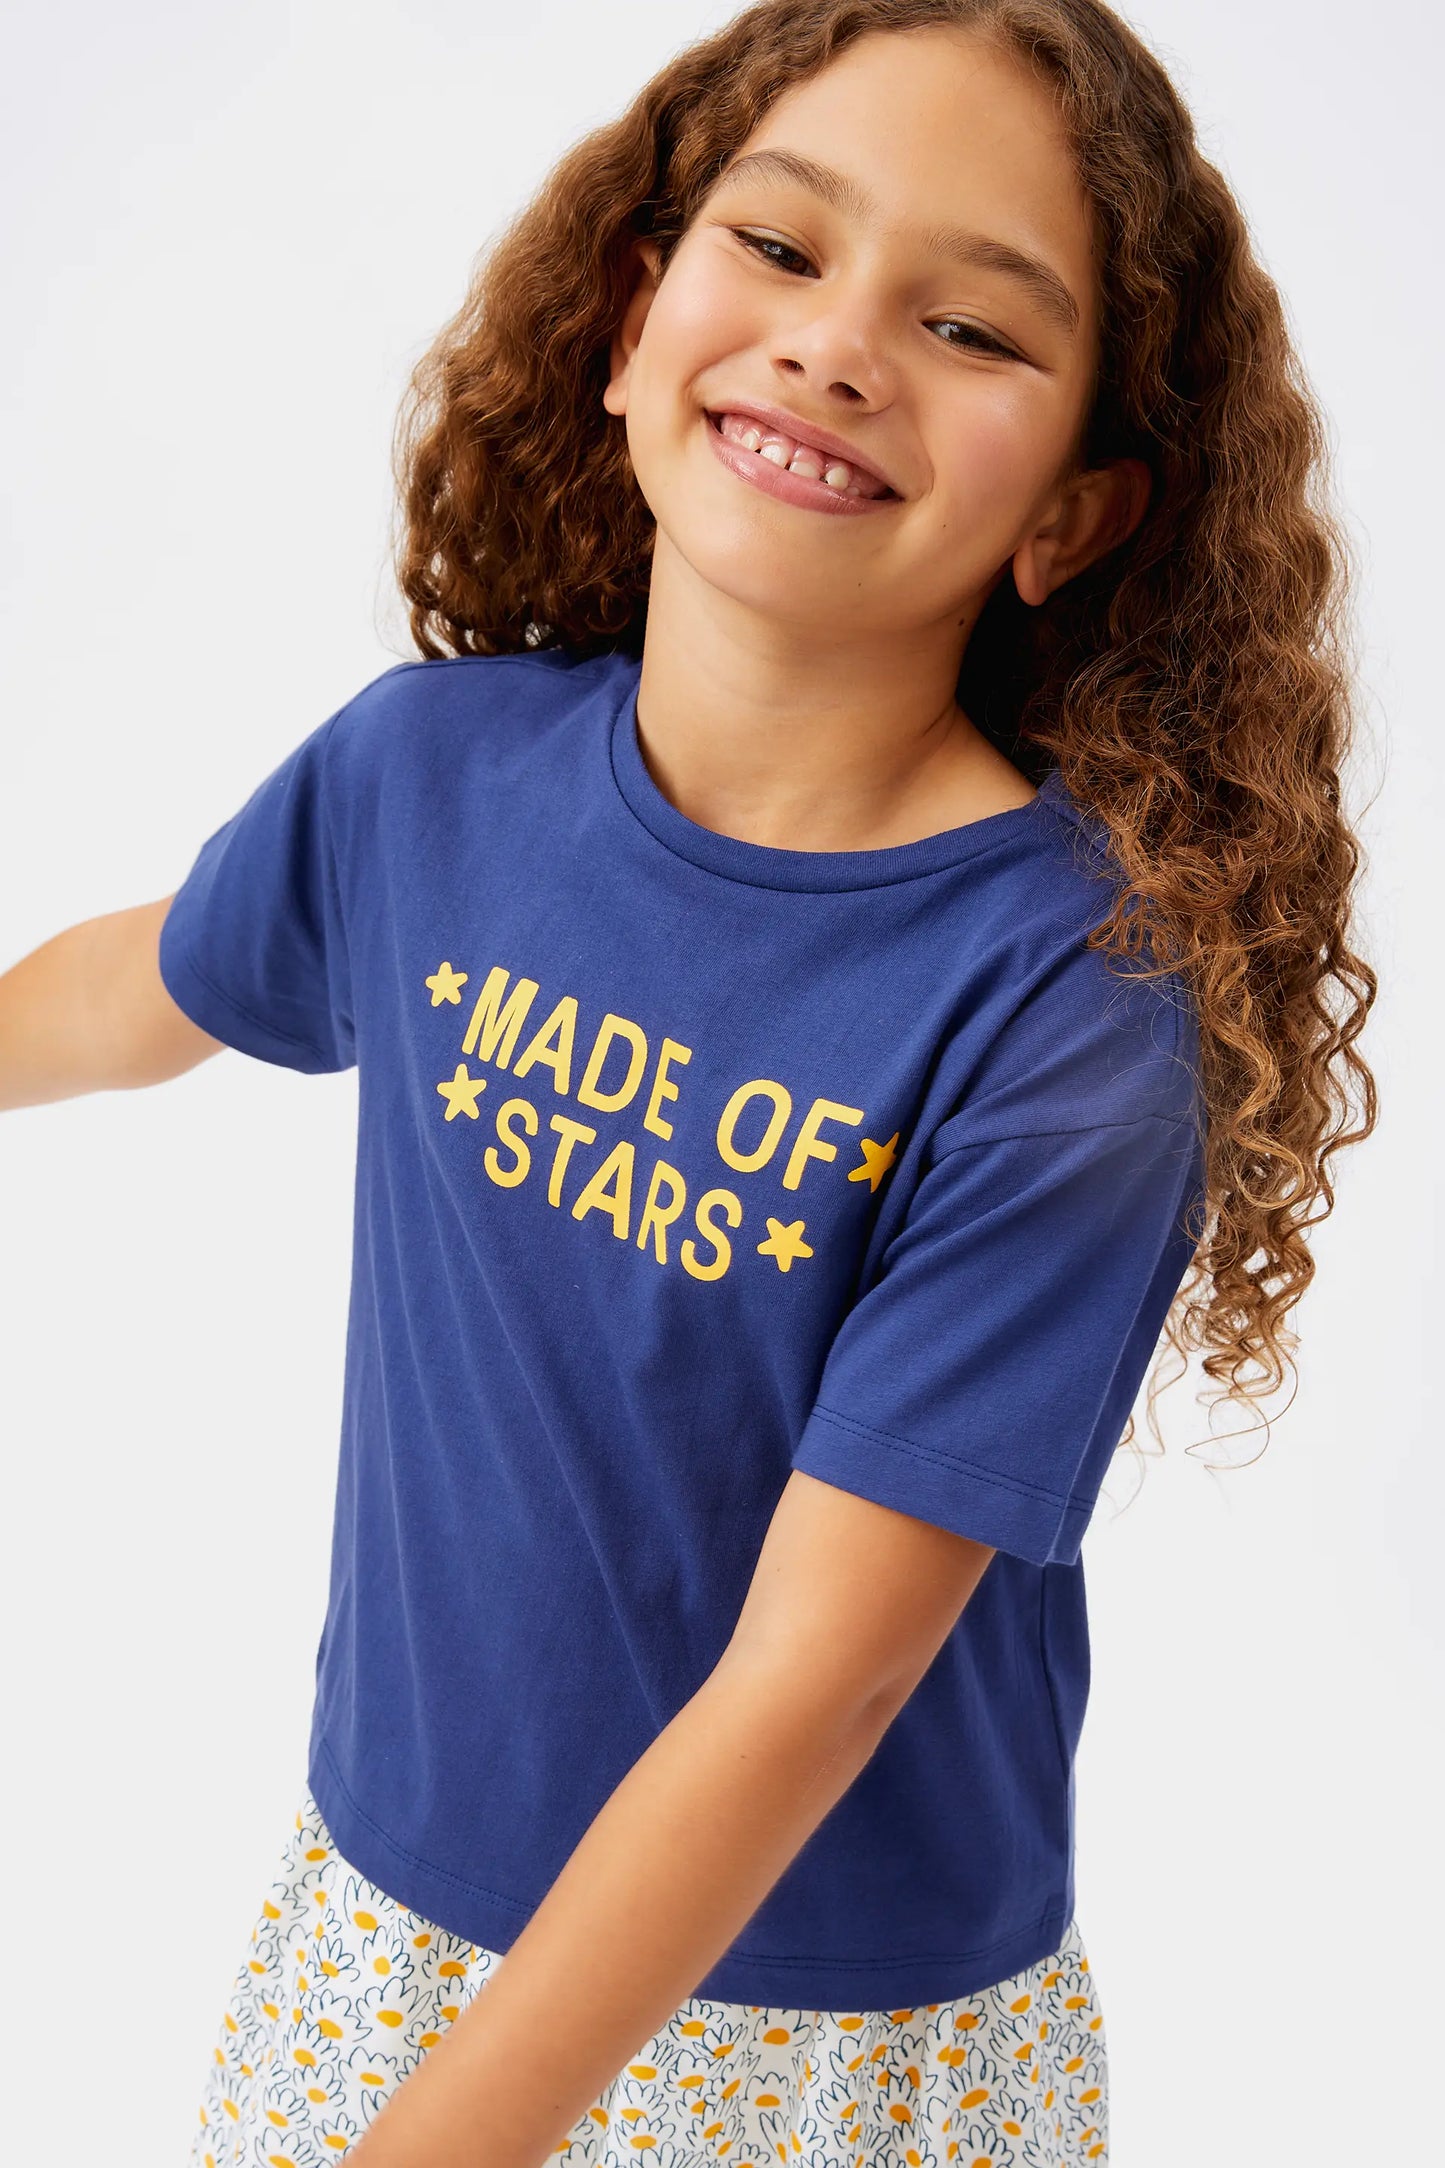 Camiseta unisex Stars azul